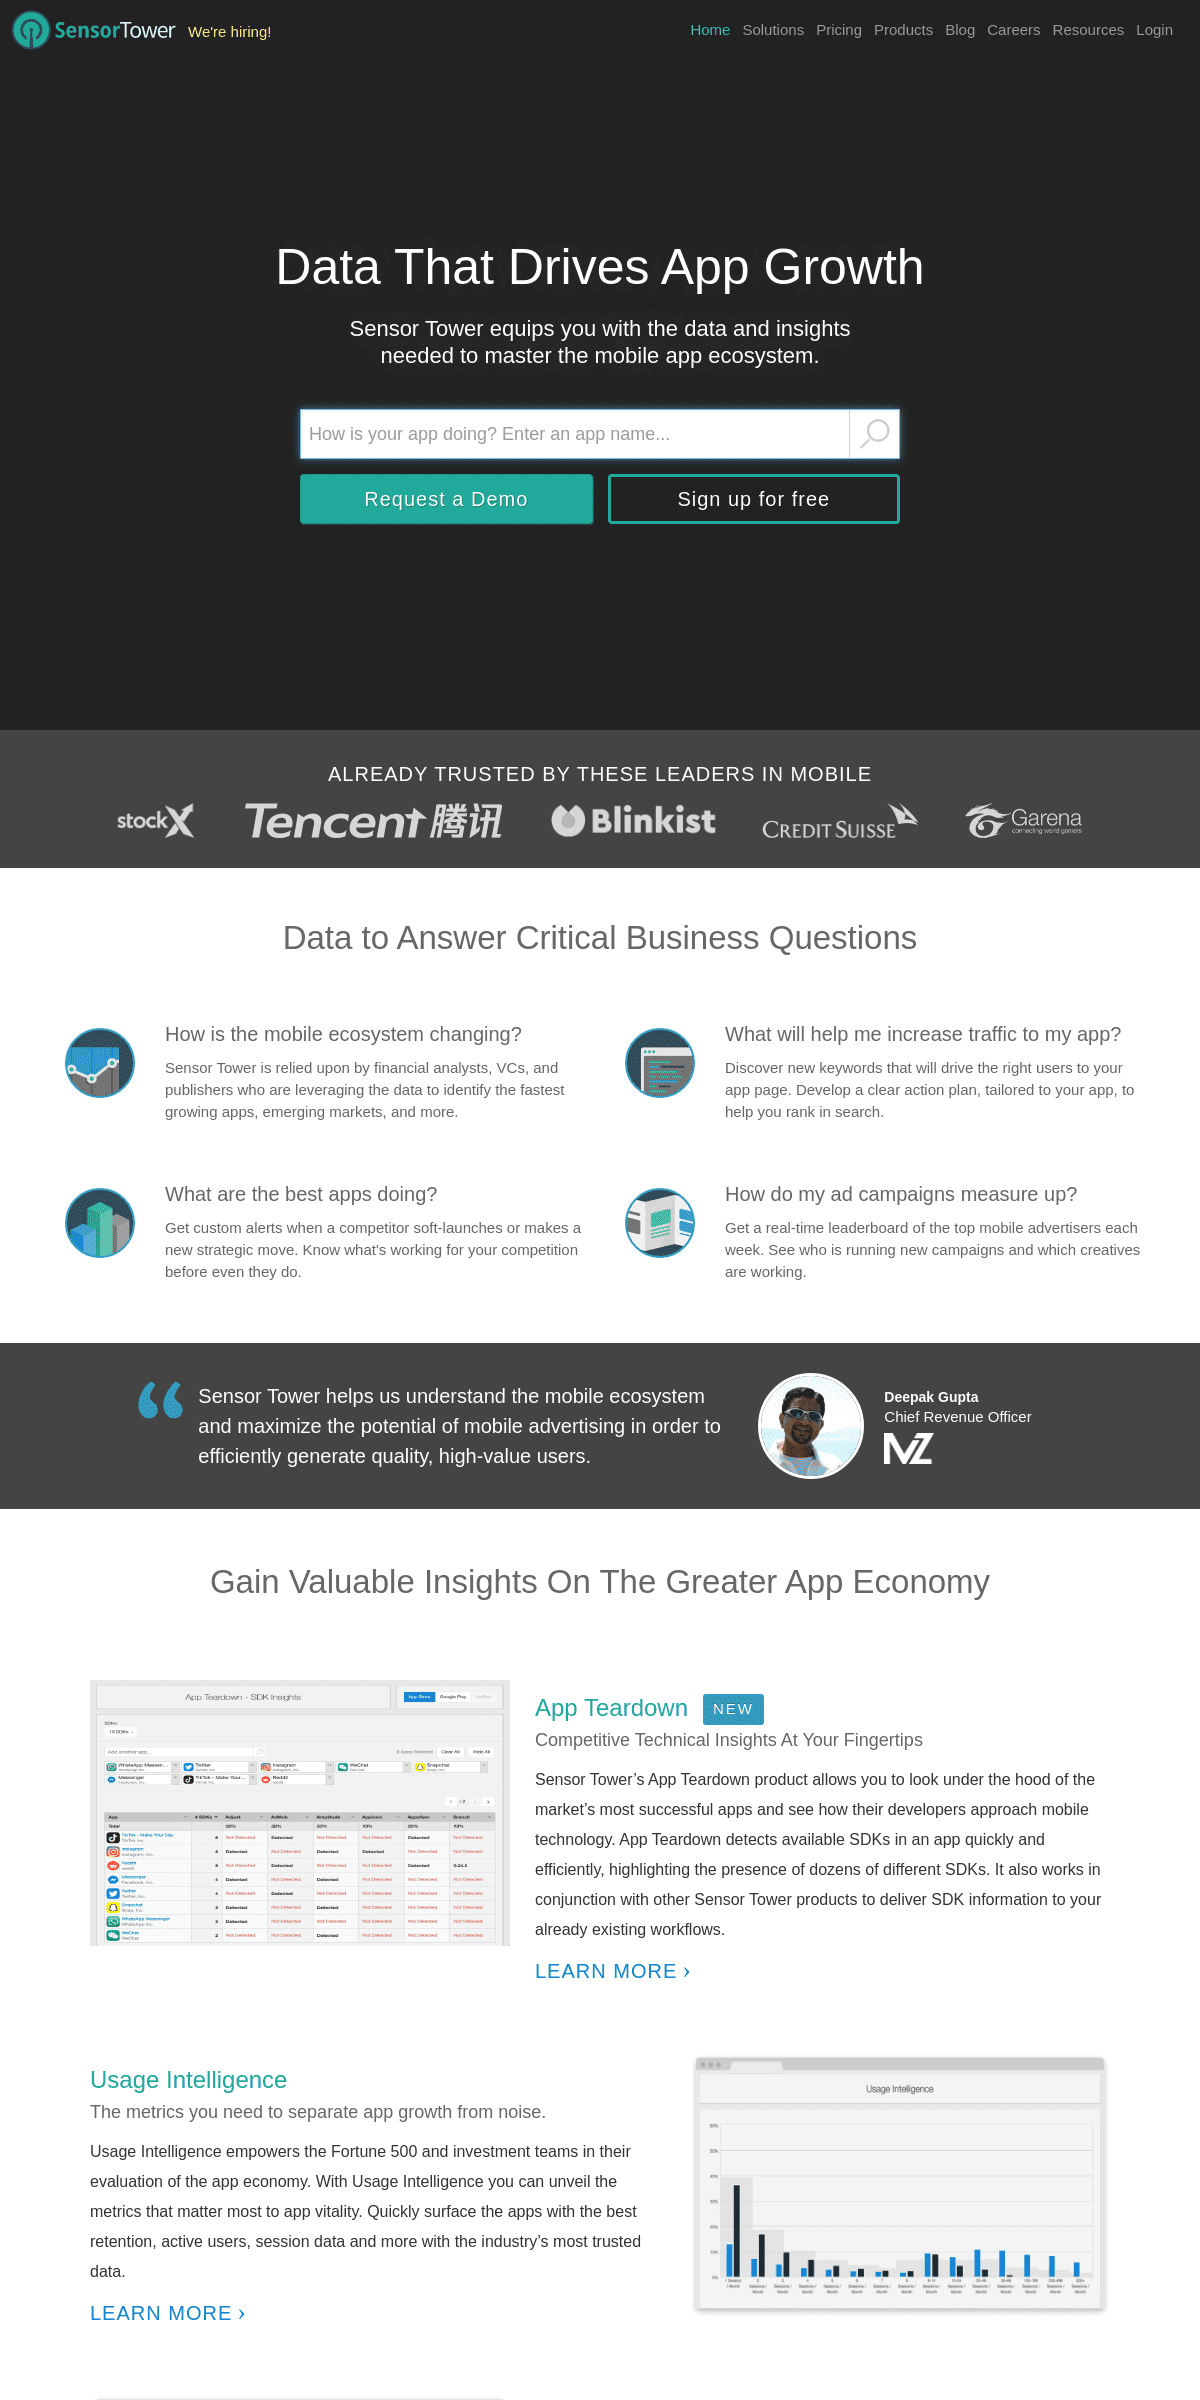 A complete backup of sensortower.com